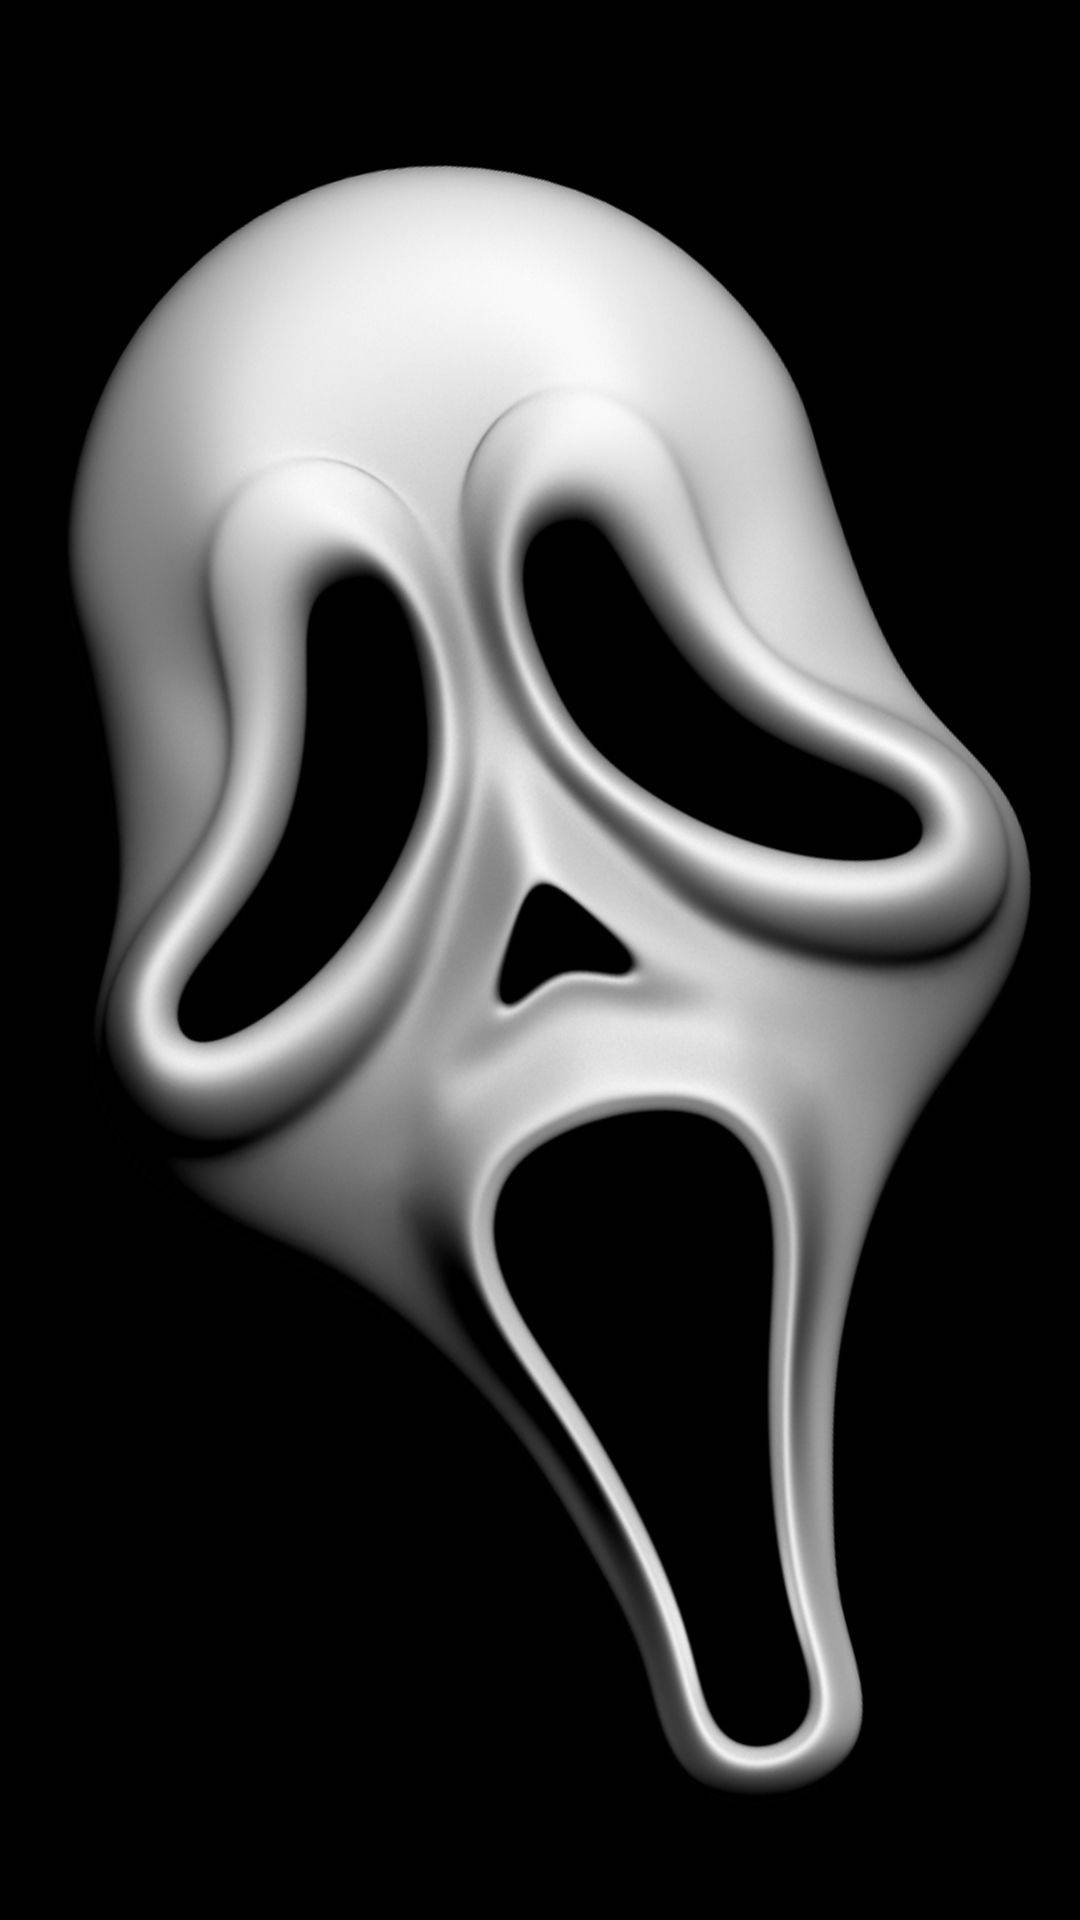 Ghostfacemaske Aus Dem Film Scream Wallpaper